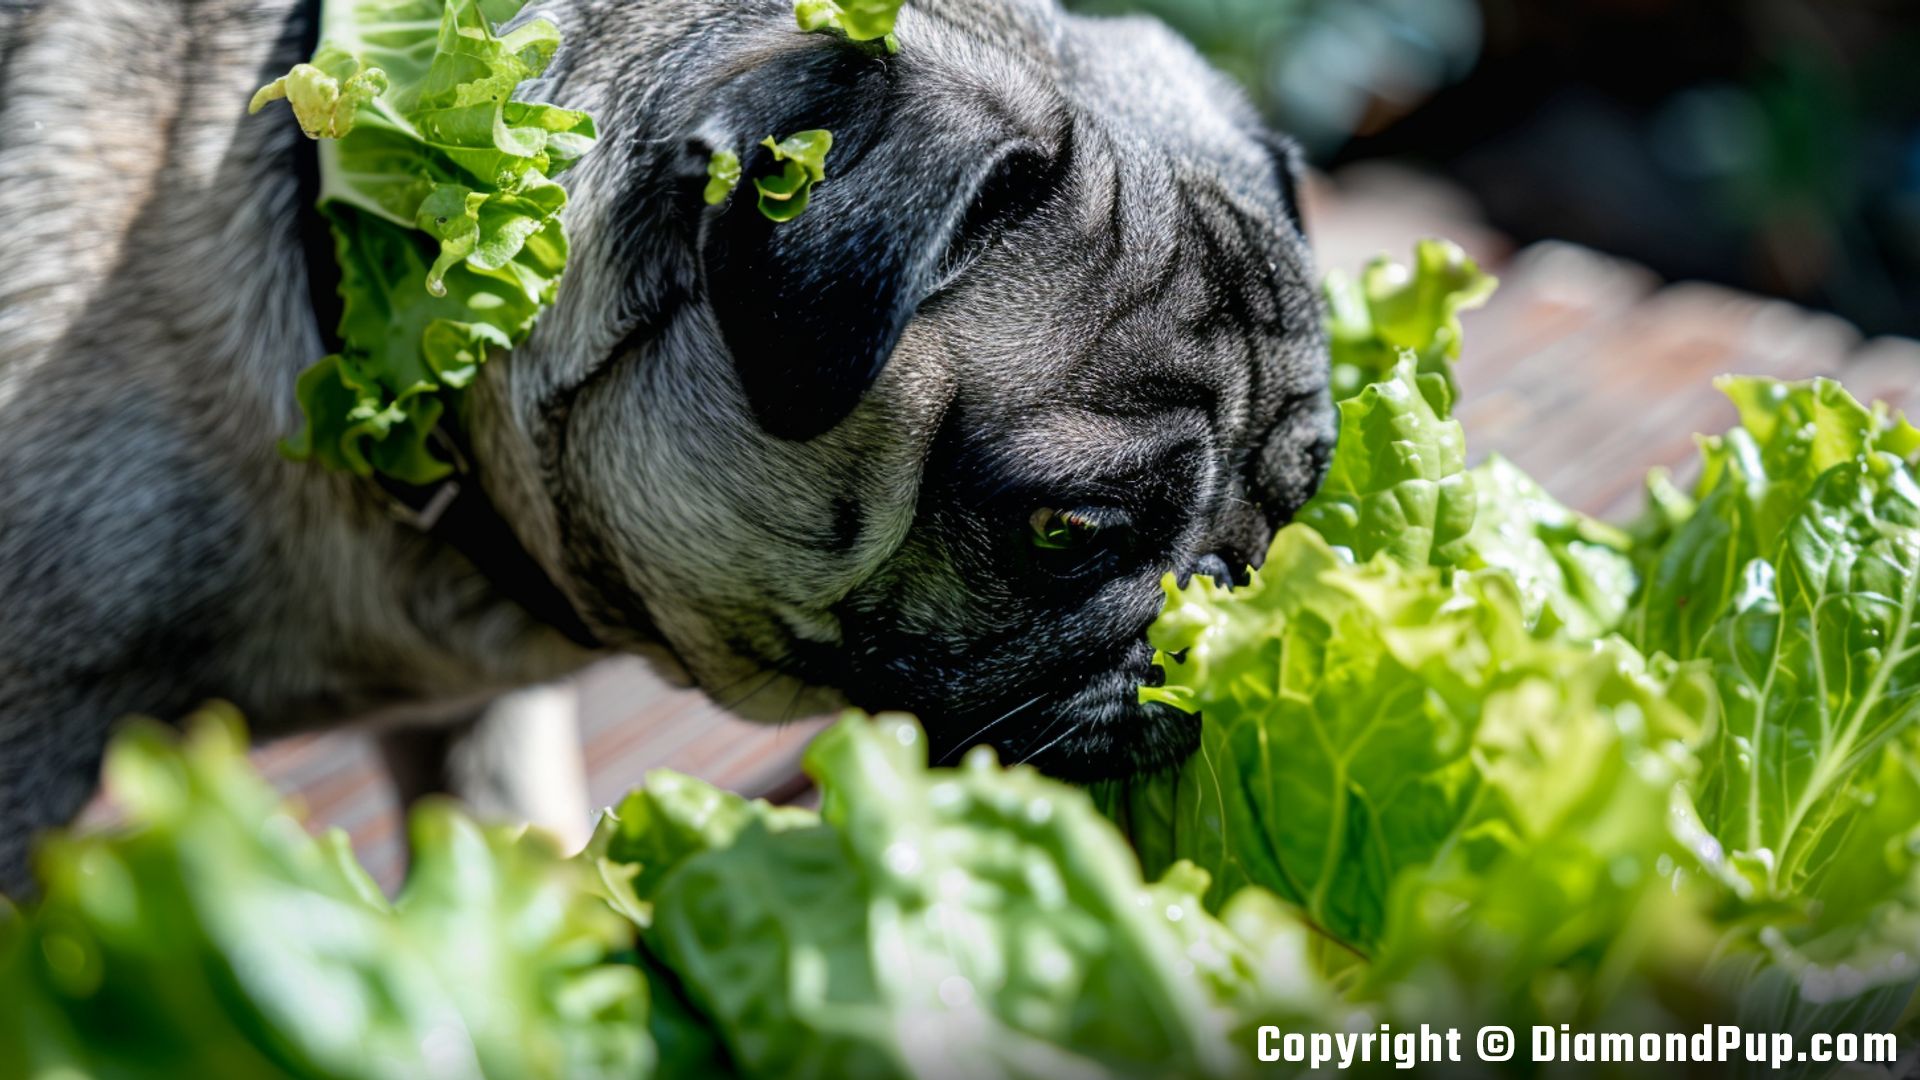 Image of a Cute Pug Eating Lettuce